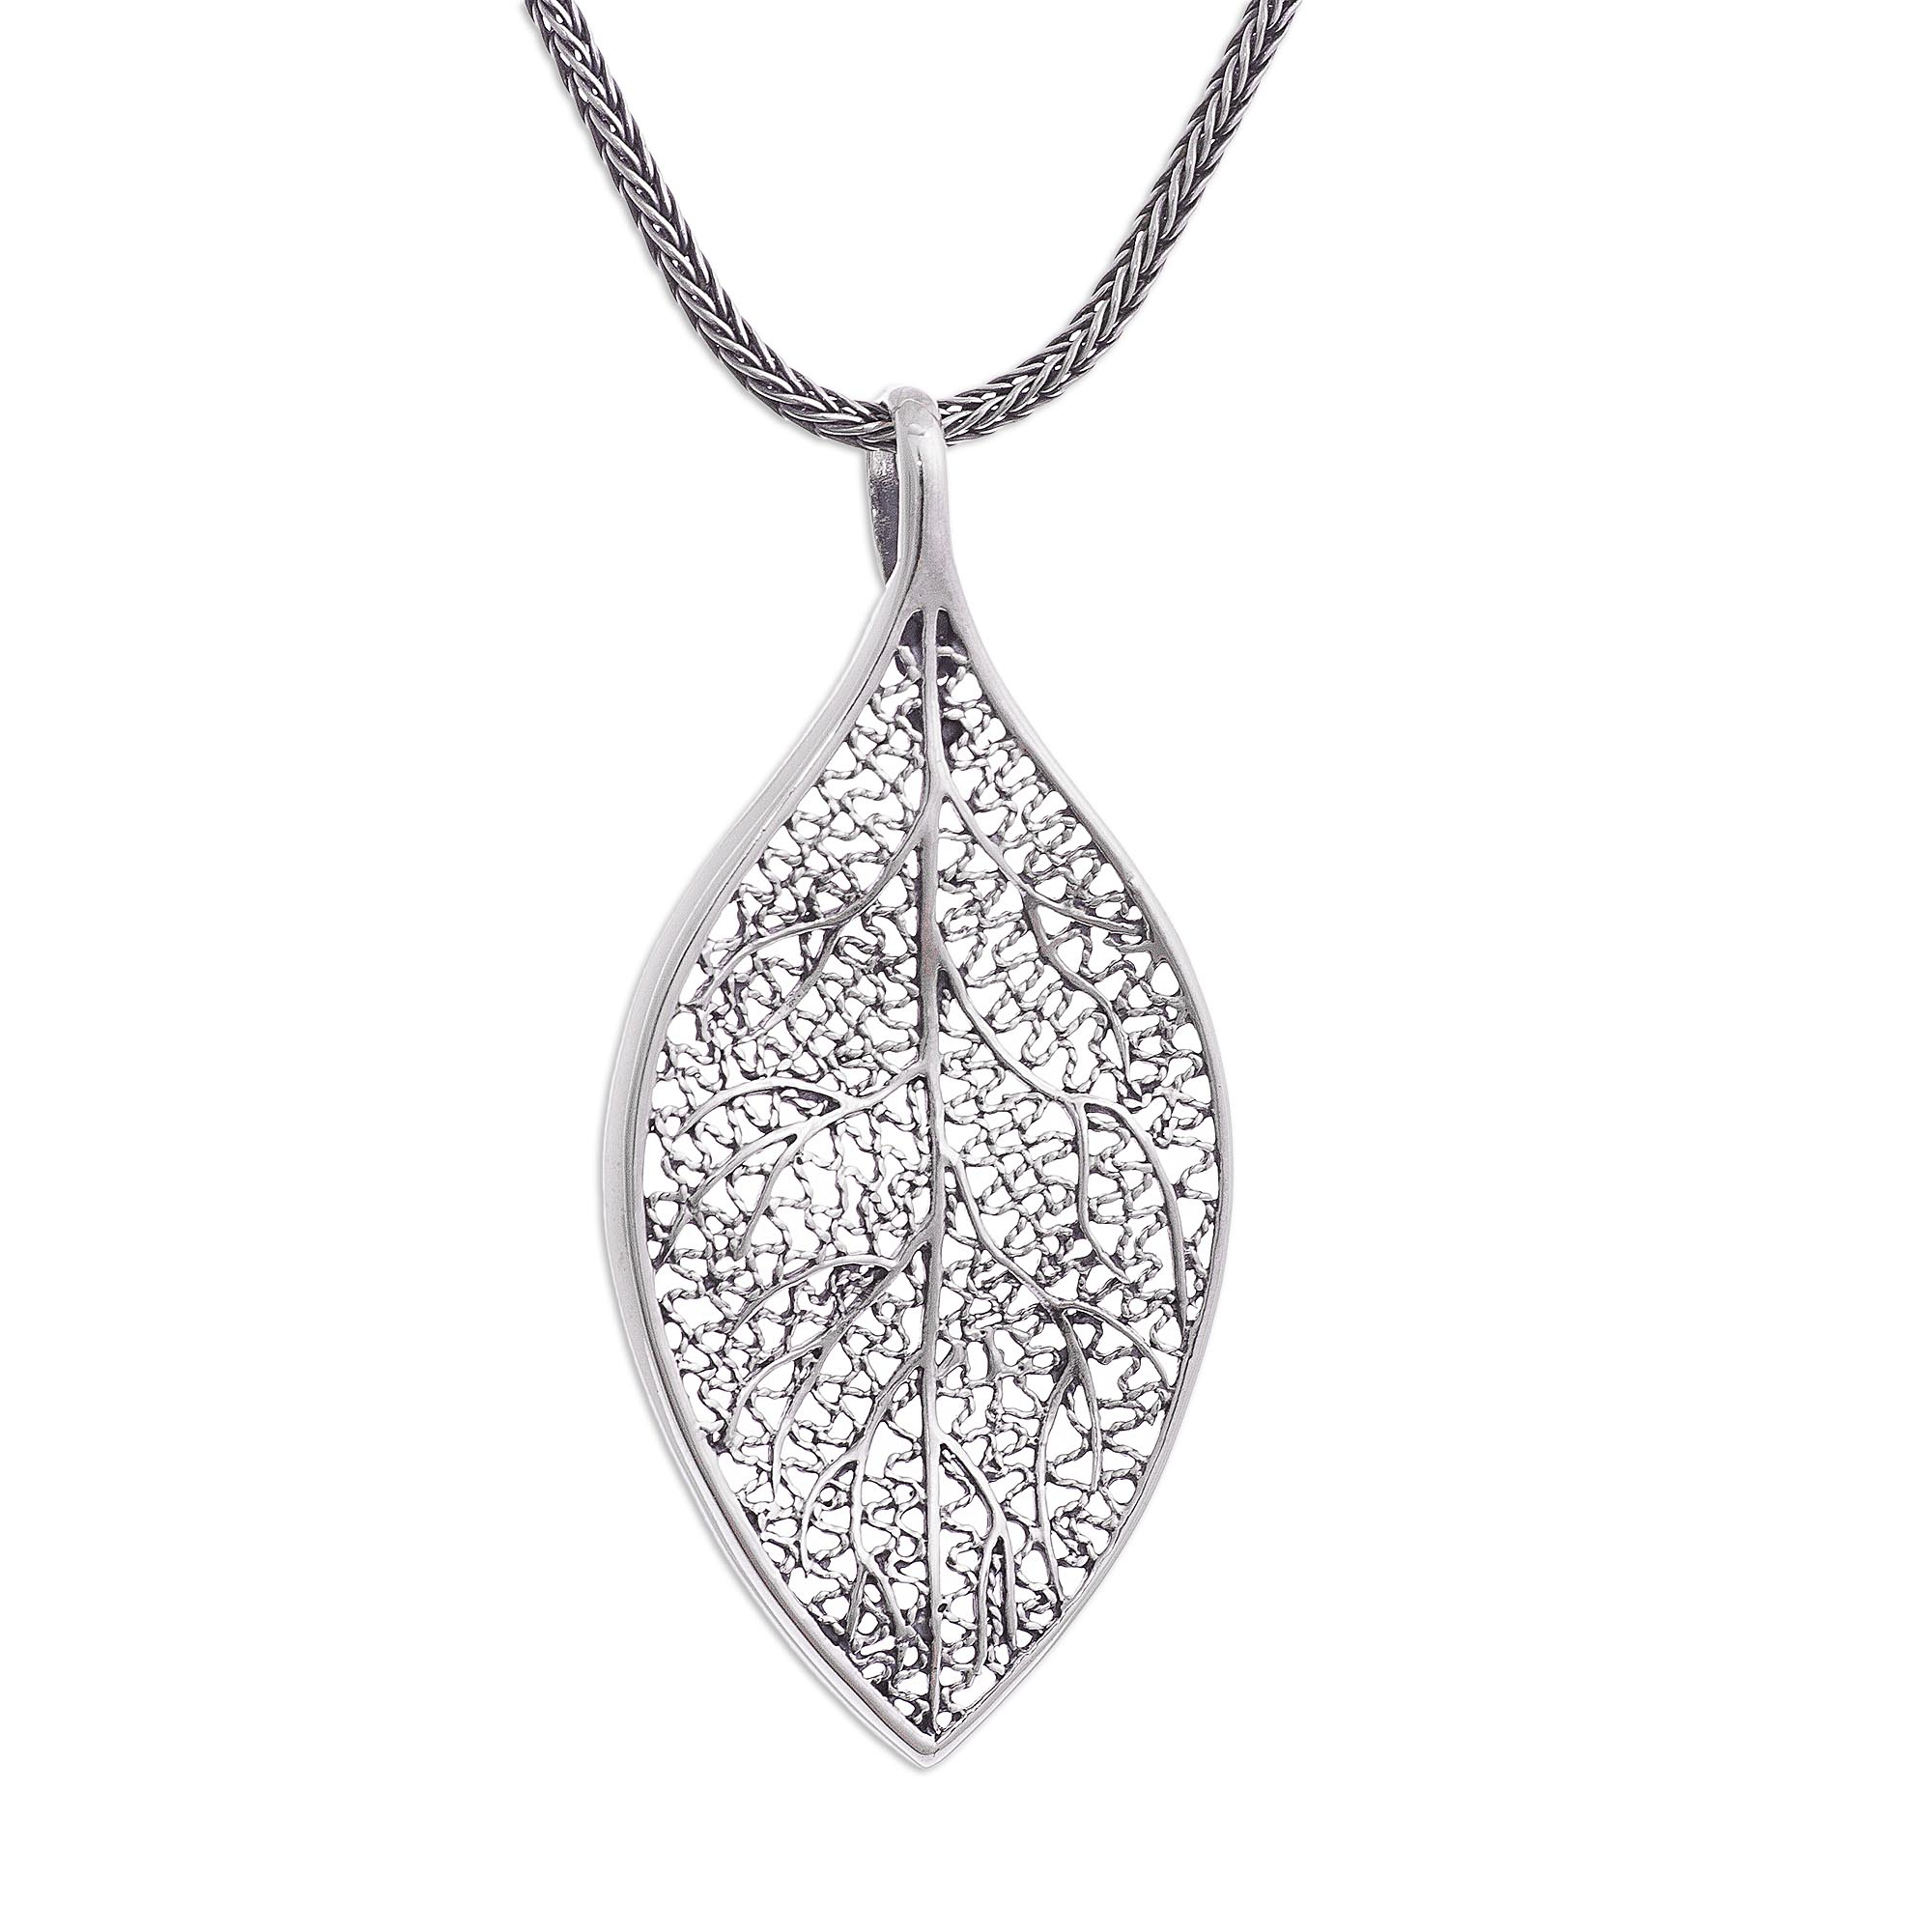 Sterling Silver Filigree Leaf Pendant Necklace from Peru - Latin Leaf ...